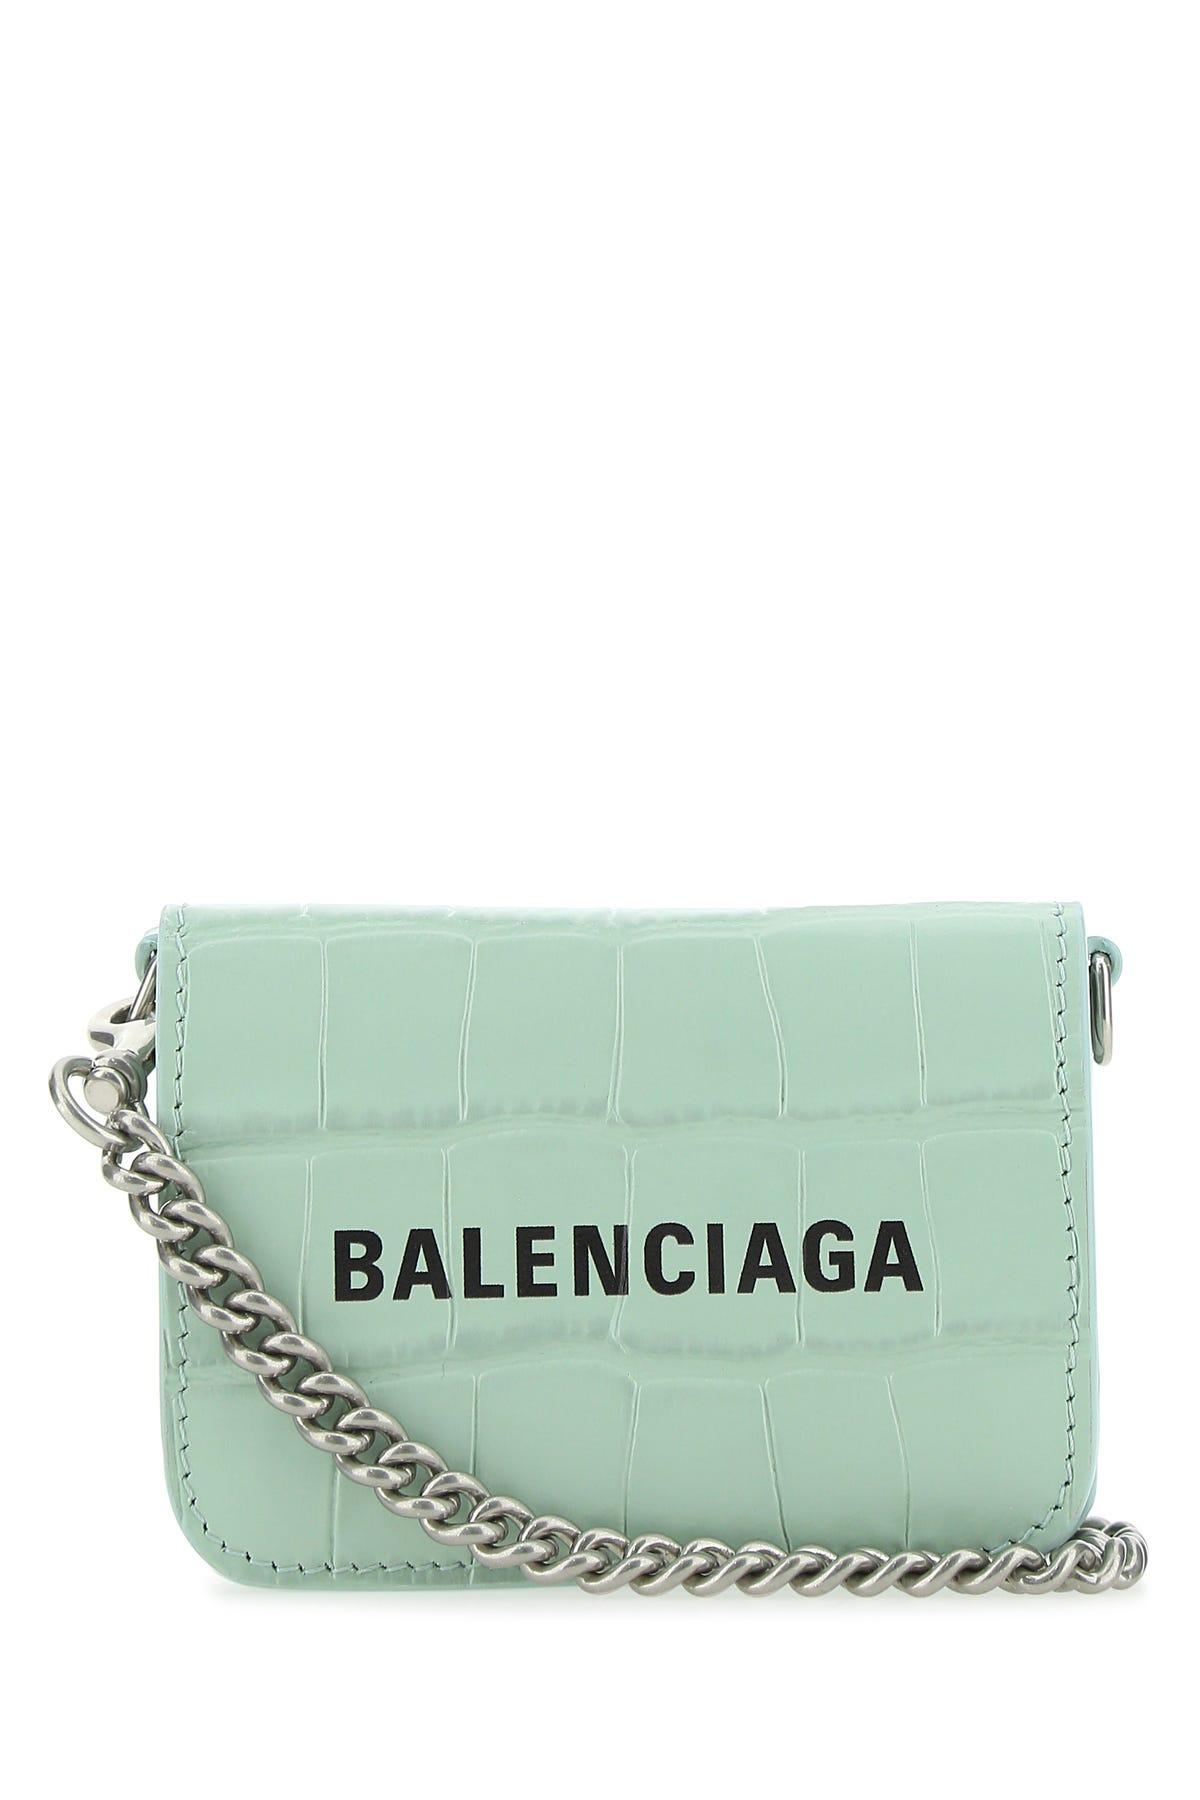 Balenciaga Mint Leather Mini Wallet in Green | Lyst